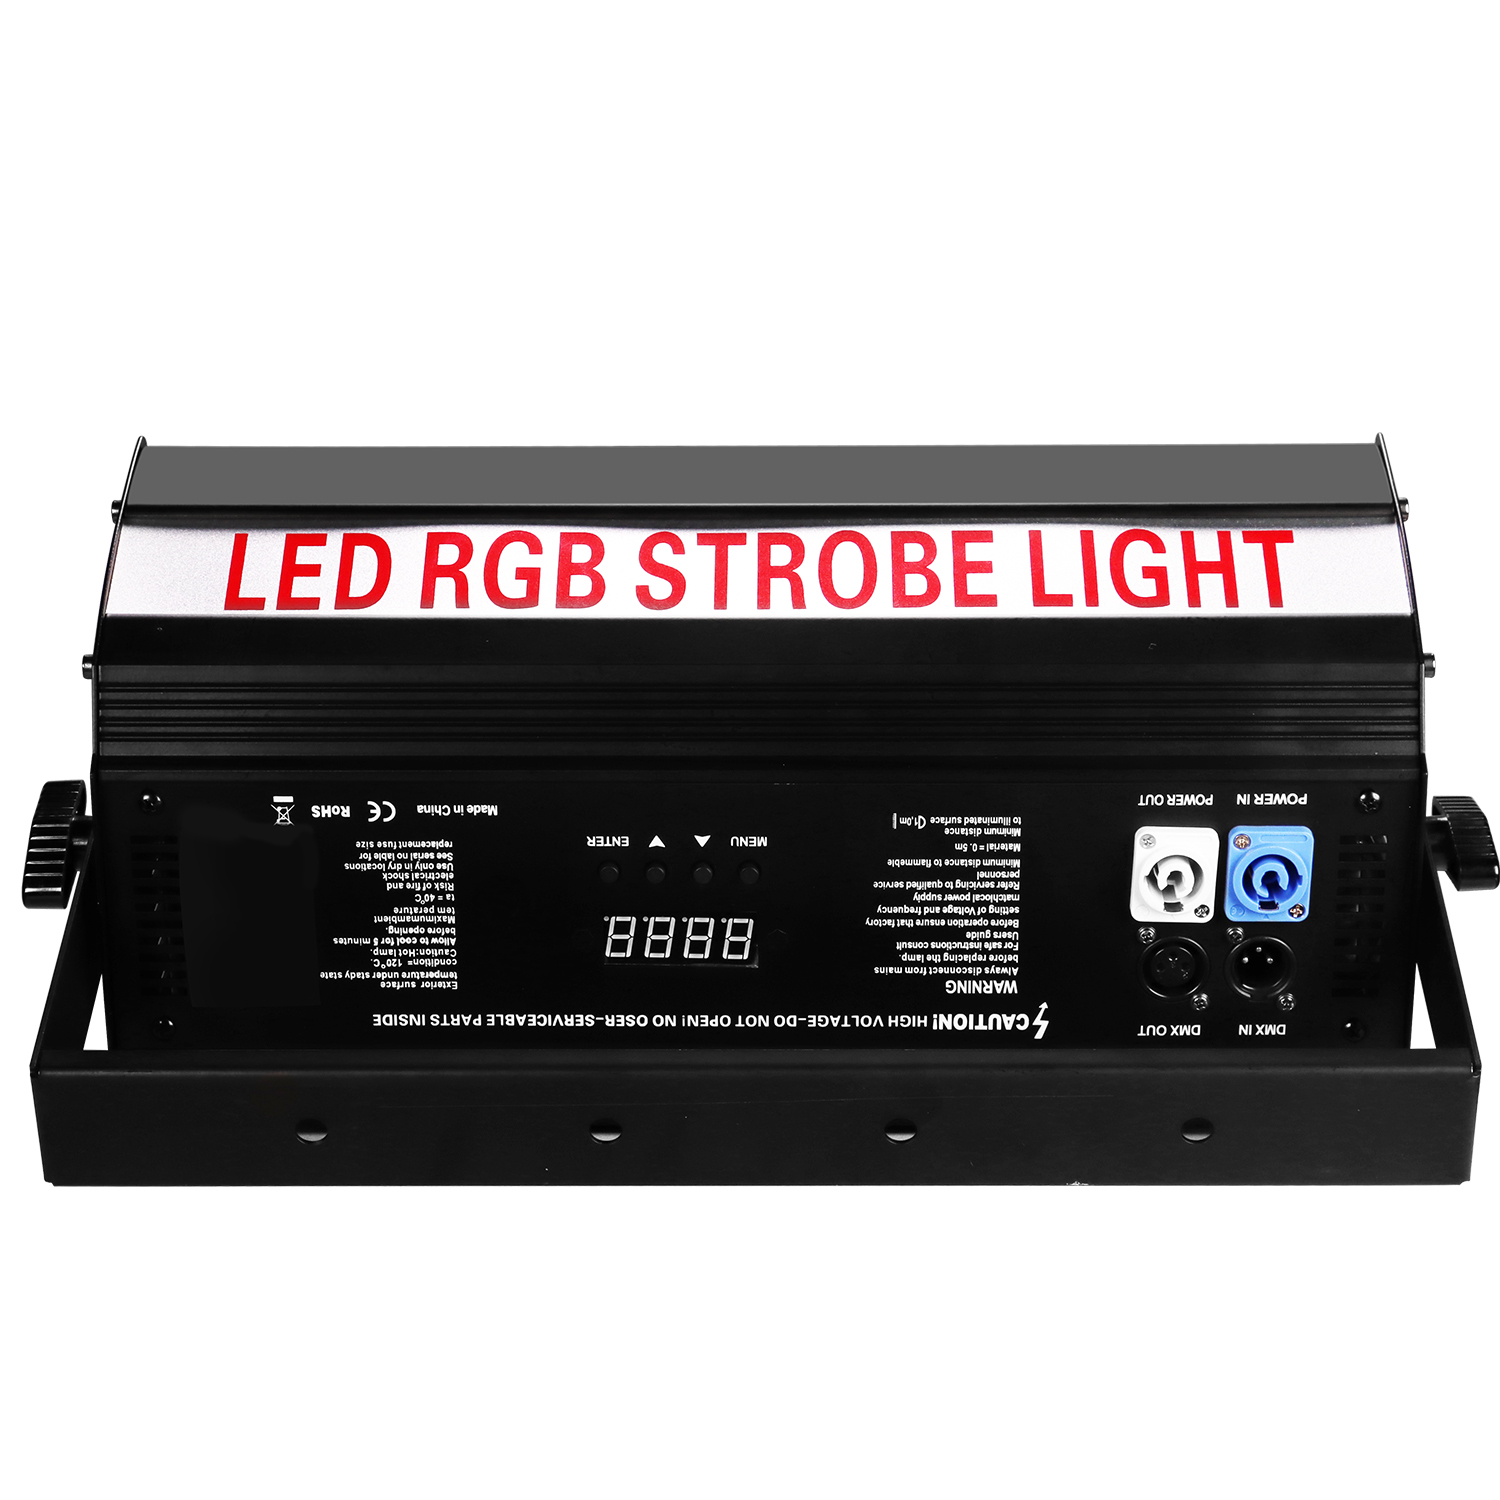 RGB LED Strobe light